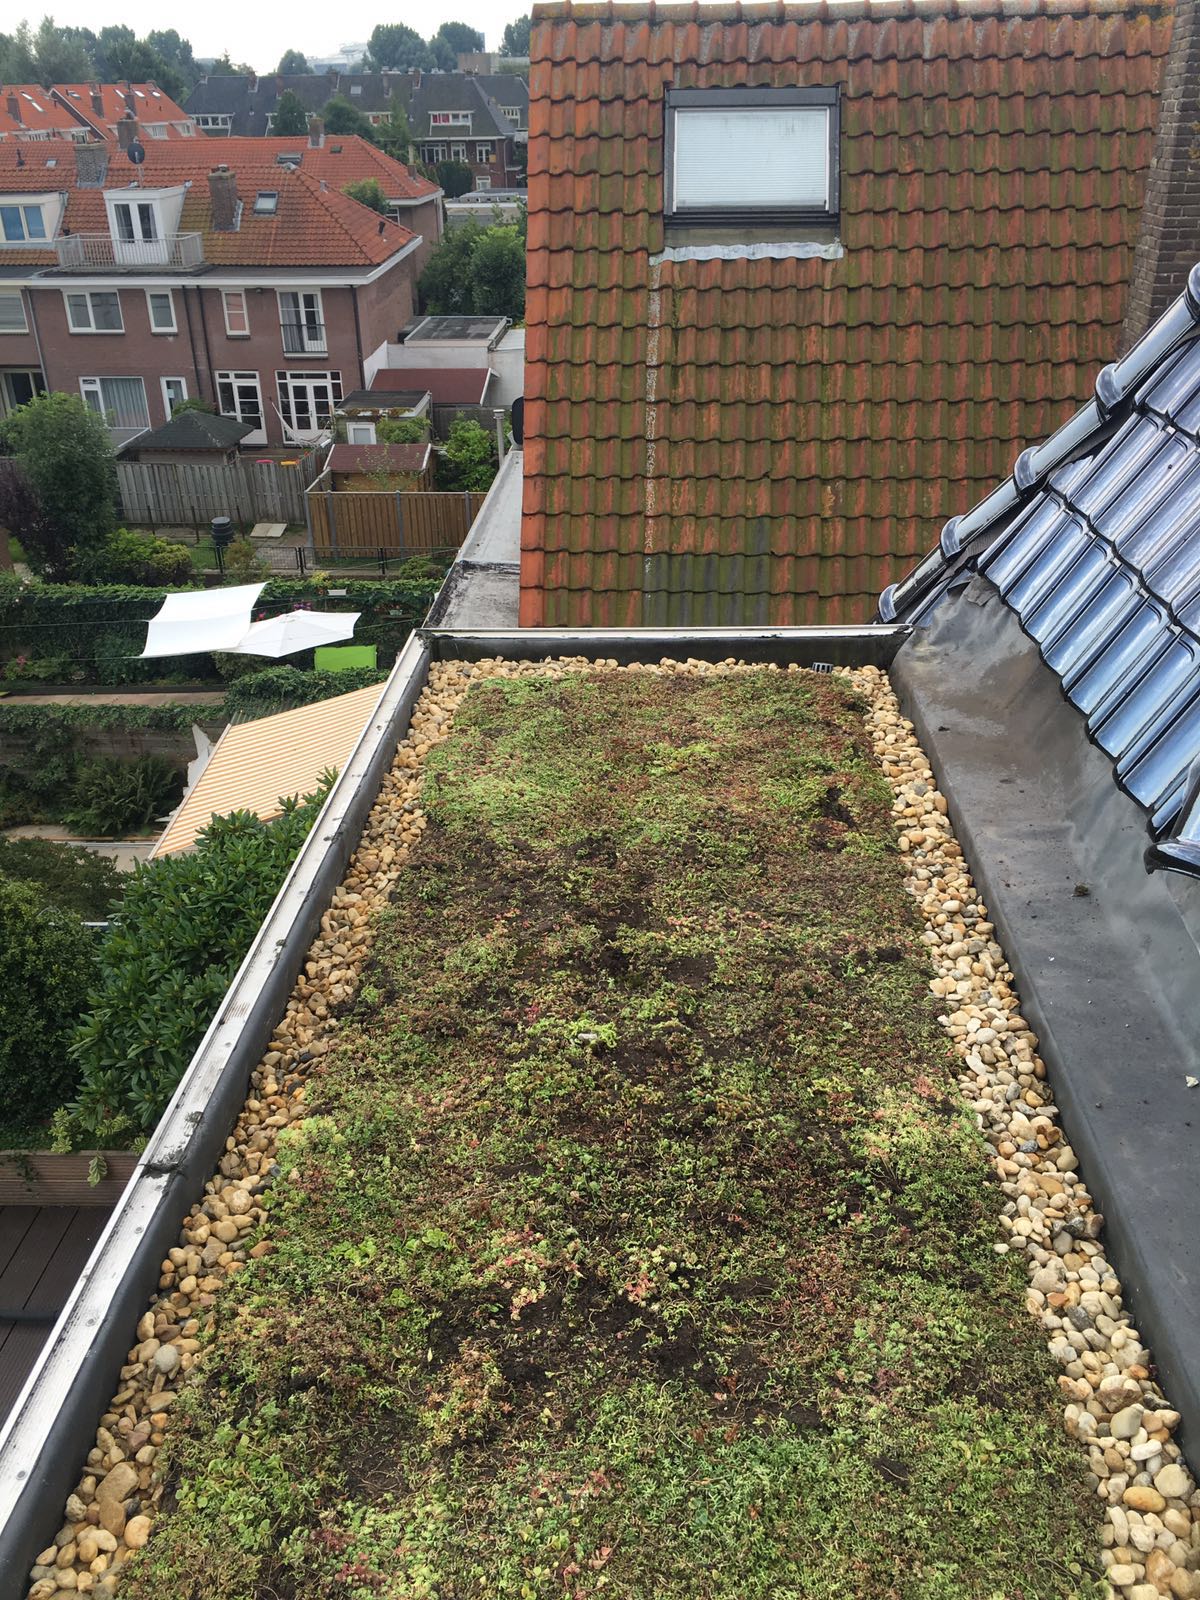 Meer groene daken in Leiden dankzij subsidie